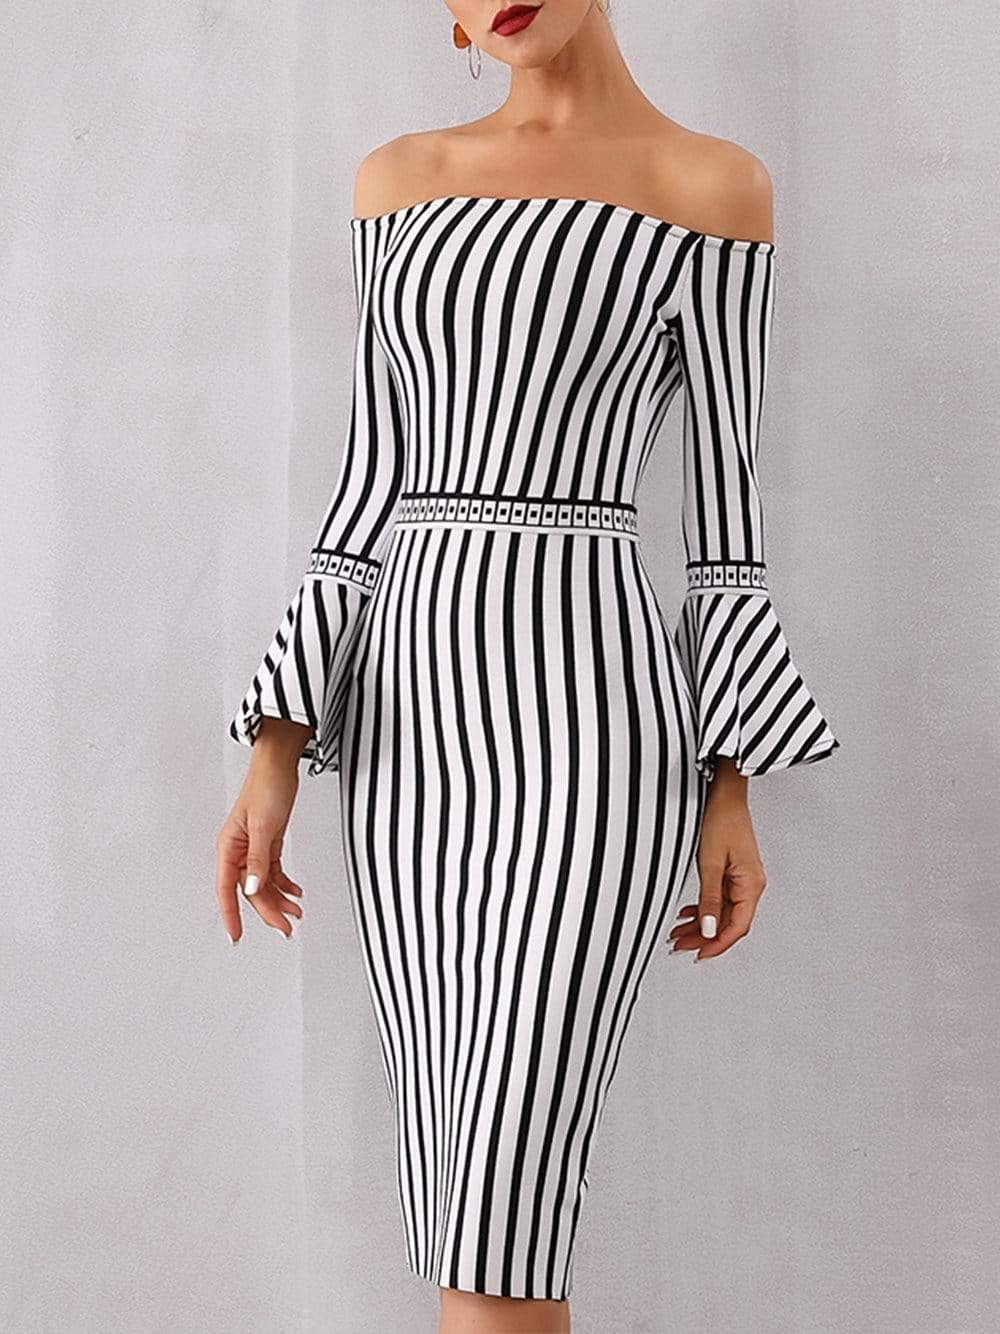 DILLON Striped Strapless Dress